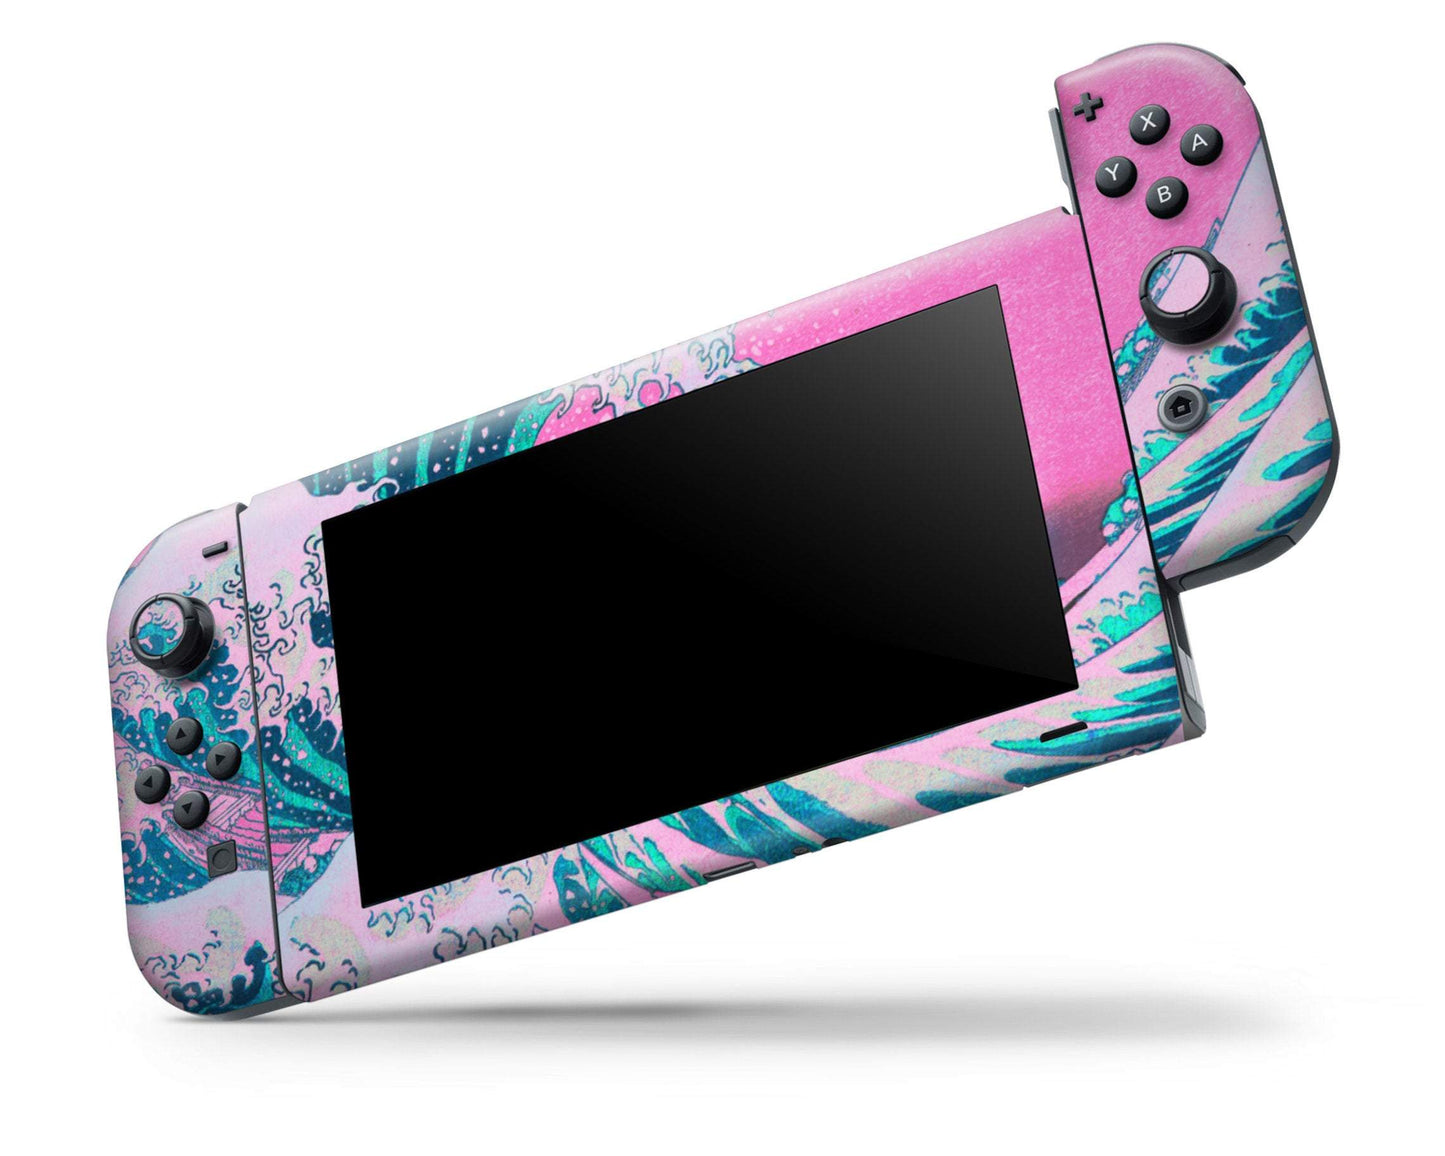 Lux Skins Nintendo Switch Great Wave off Kanagawa Pink Retrowave Classic no logo Skins - Art Artwork Skin